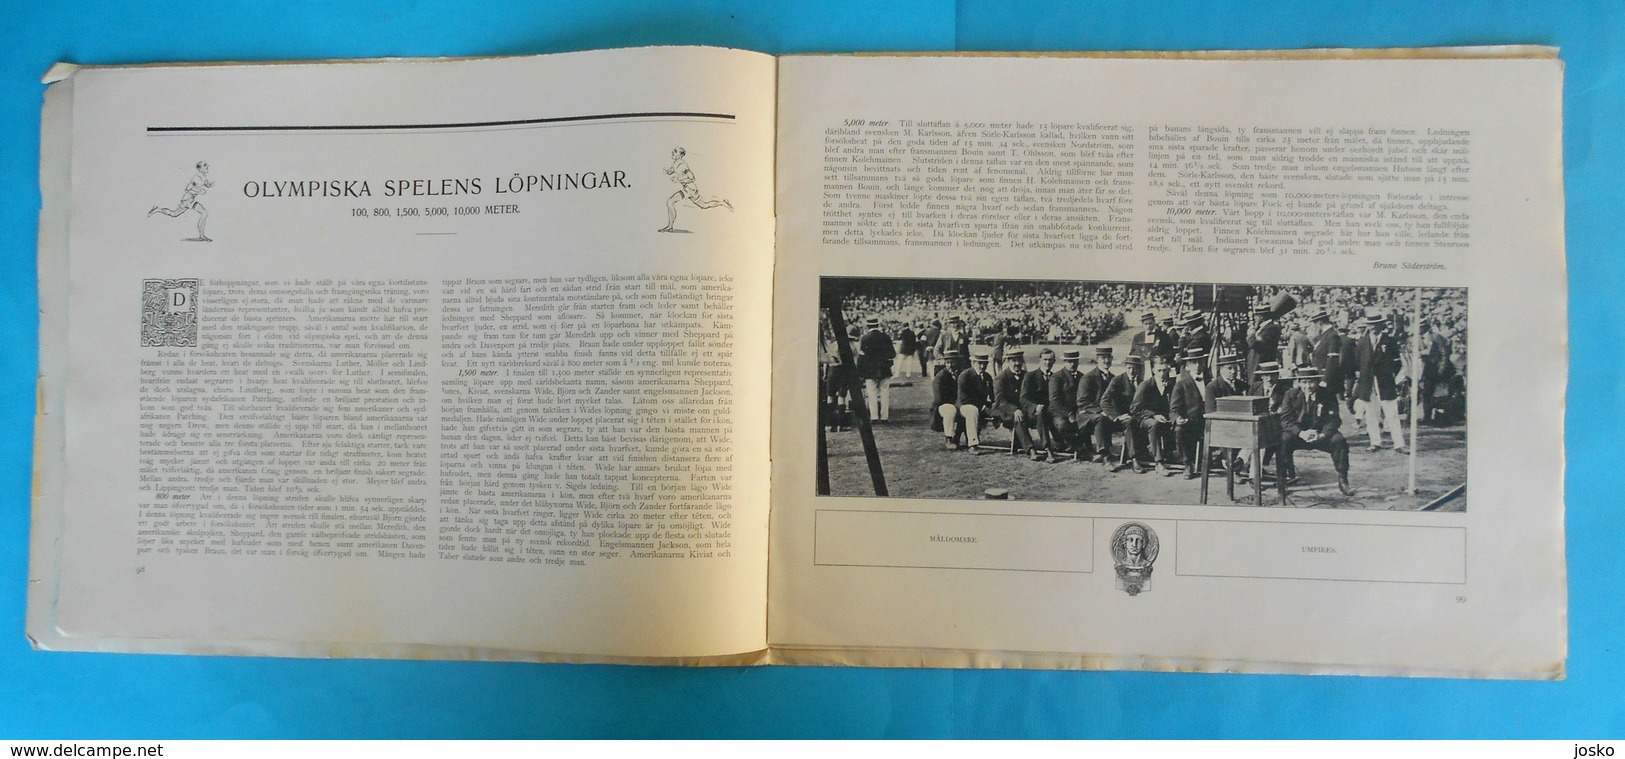 ATHLETICS On OLYMPIC GAMES 1912 STOCKHOLM - Original Vintage Programme * Athletisme Atletismo Atletica Athletik Athletic - Libros